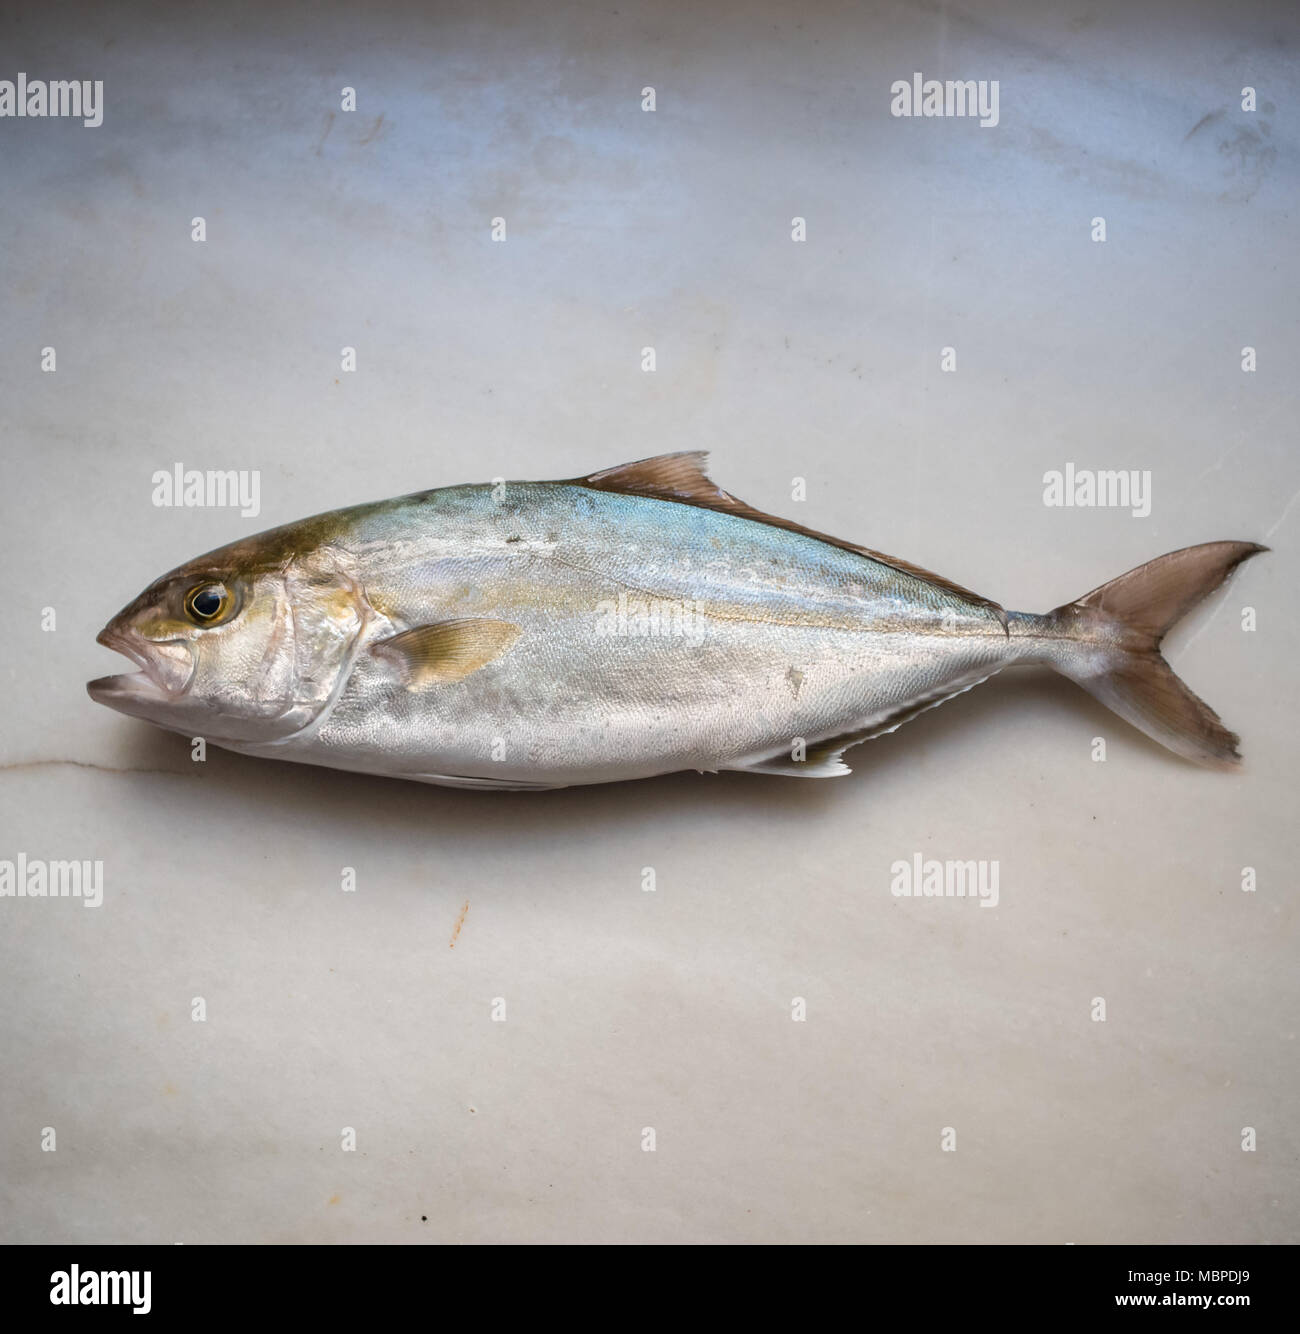 Greater amberjack fish Stock Photo